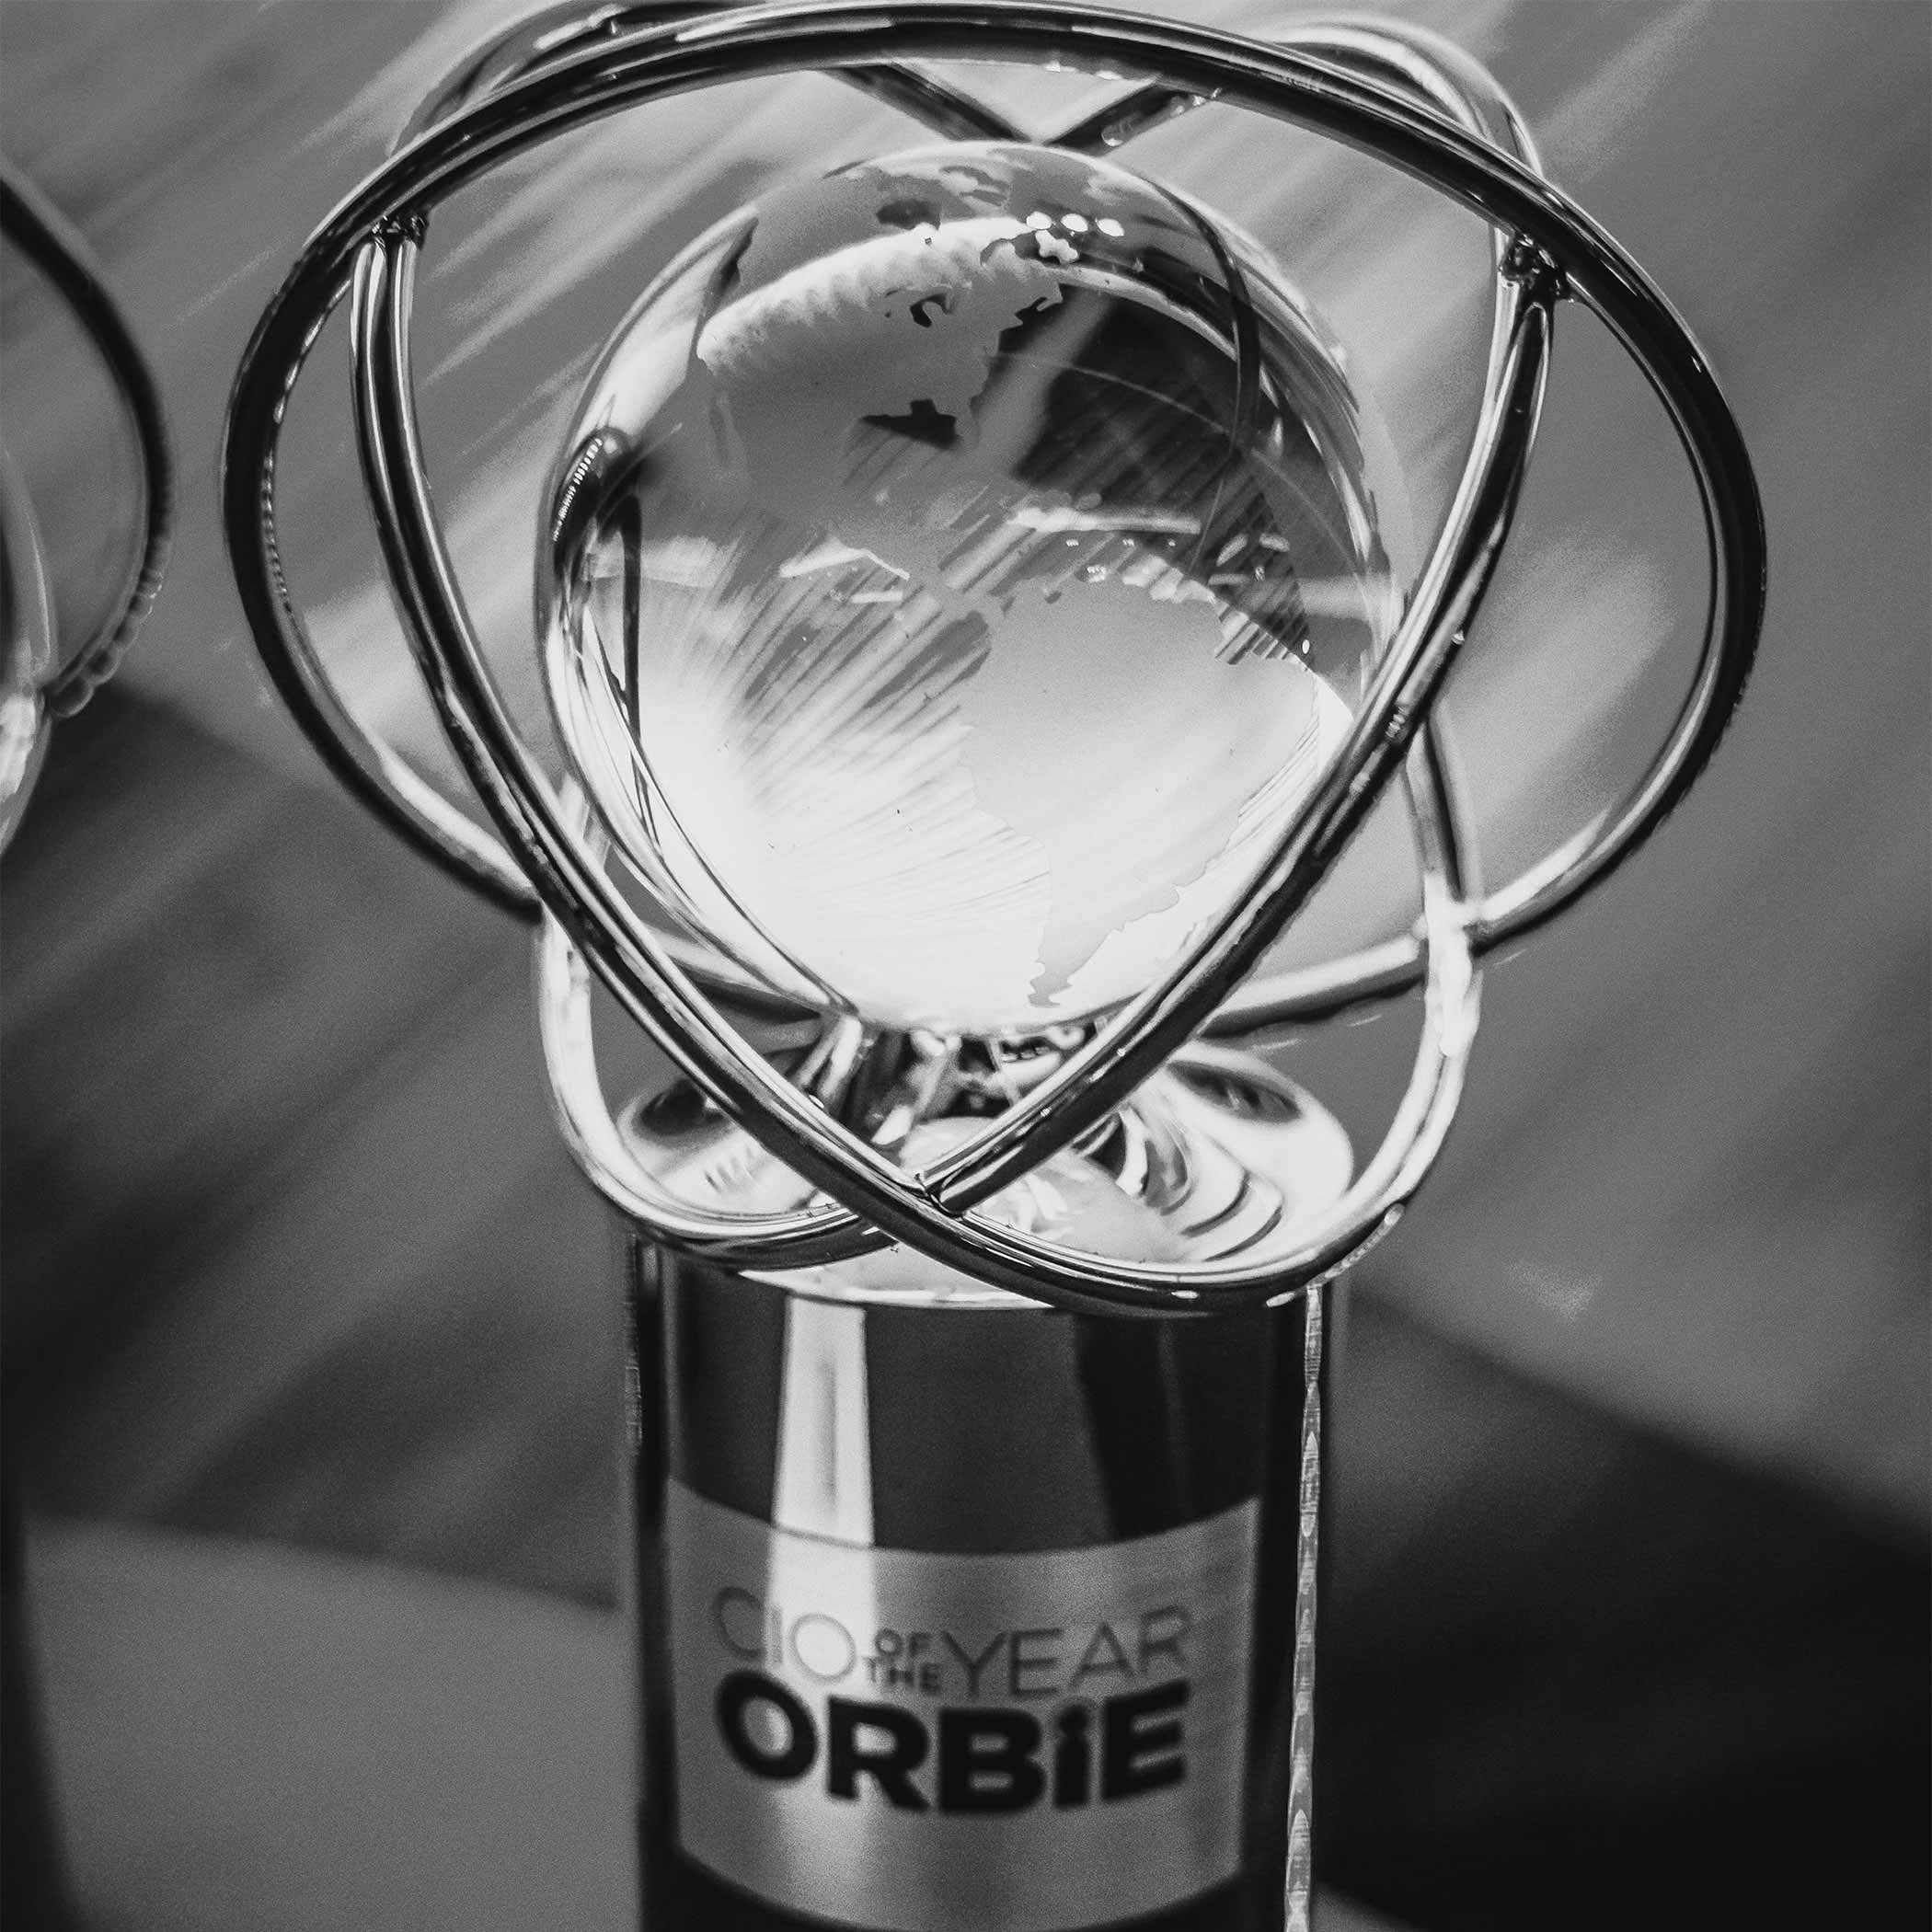 ORBIE Award